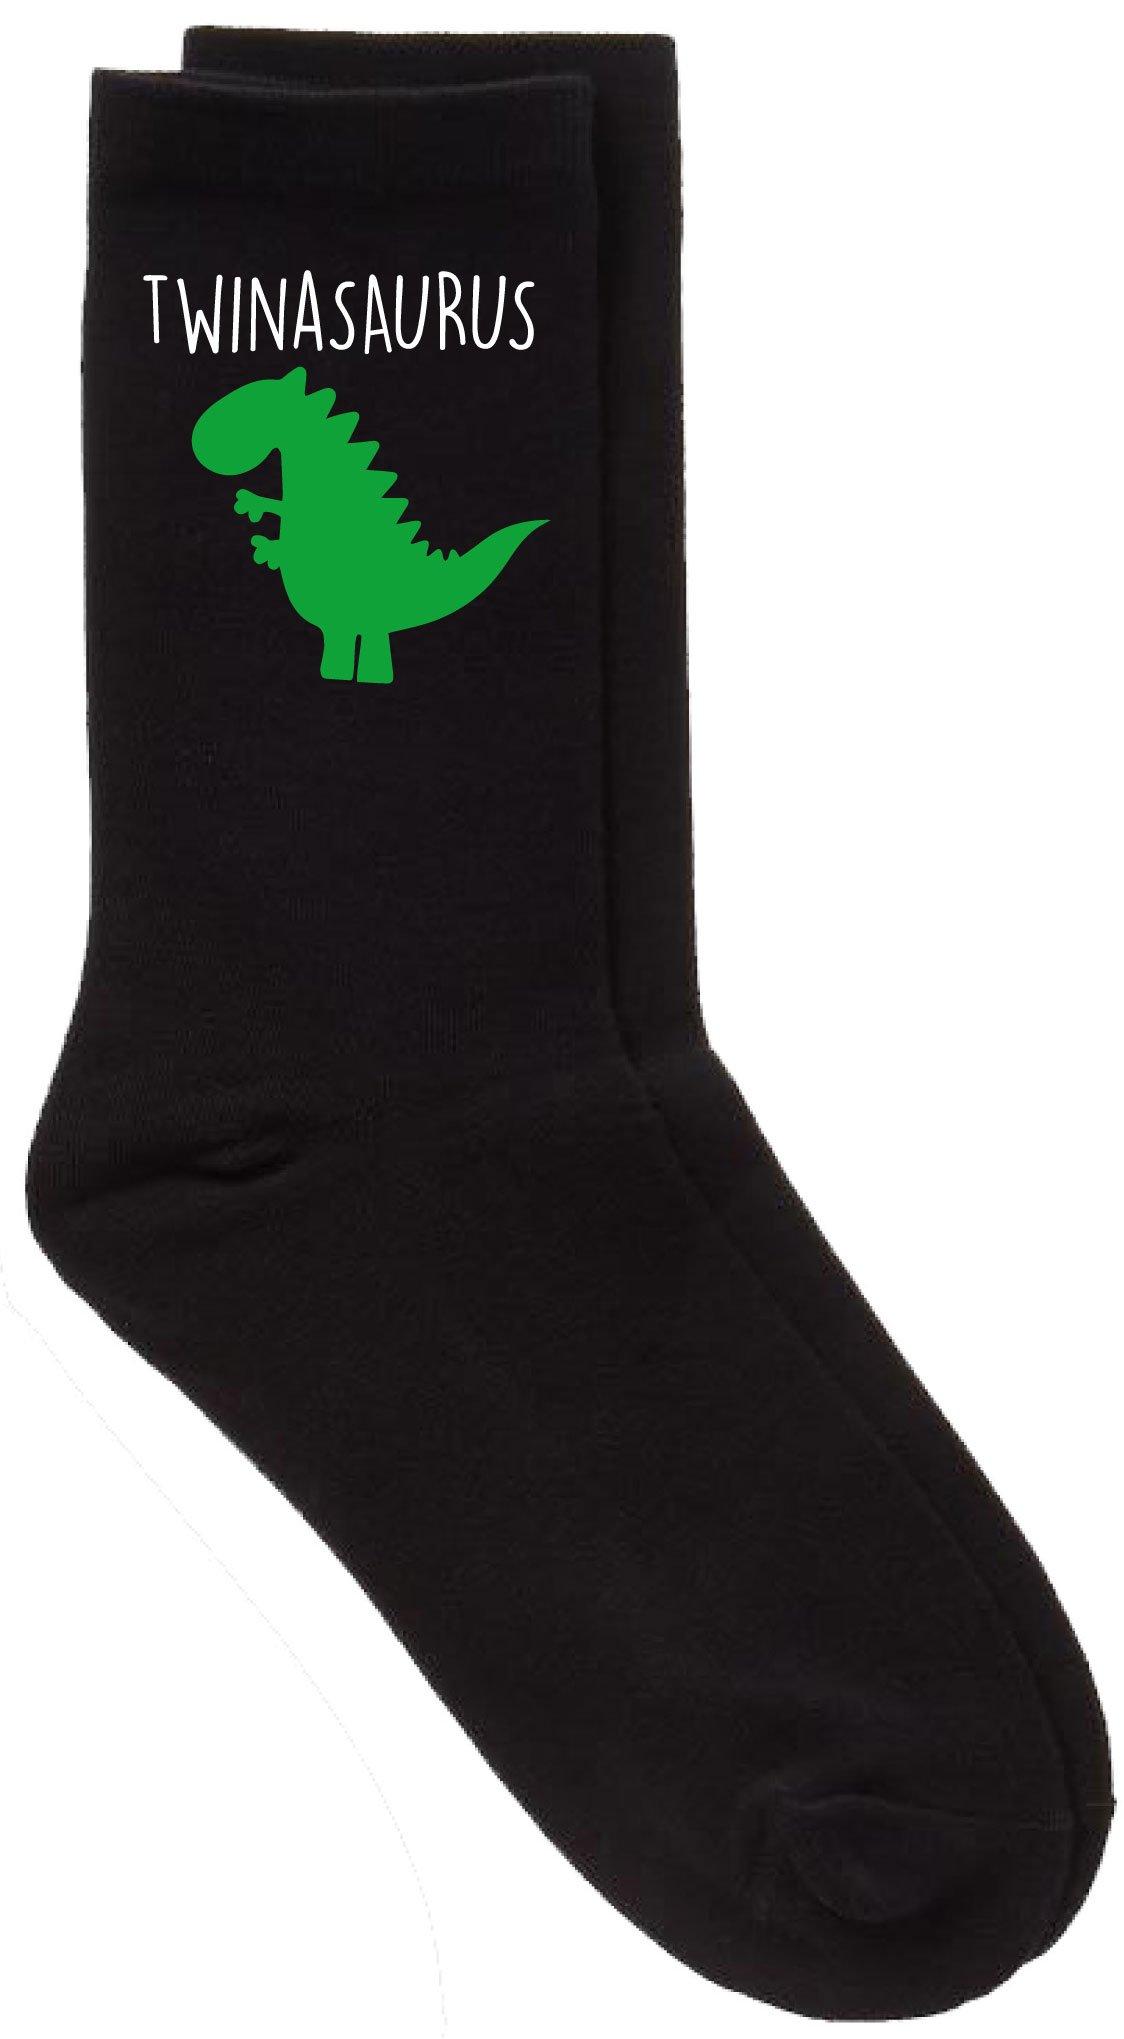 Twin Dinosaur Twinasaurus Black Calf Socks